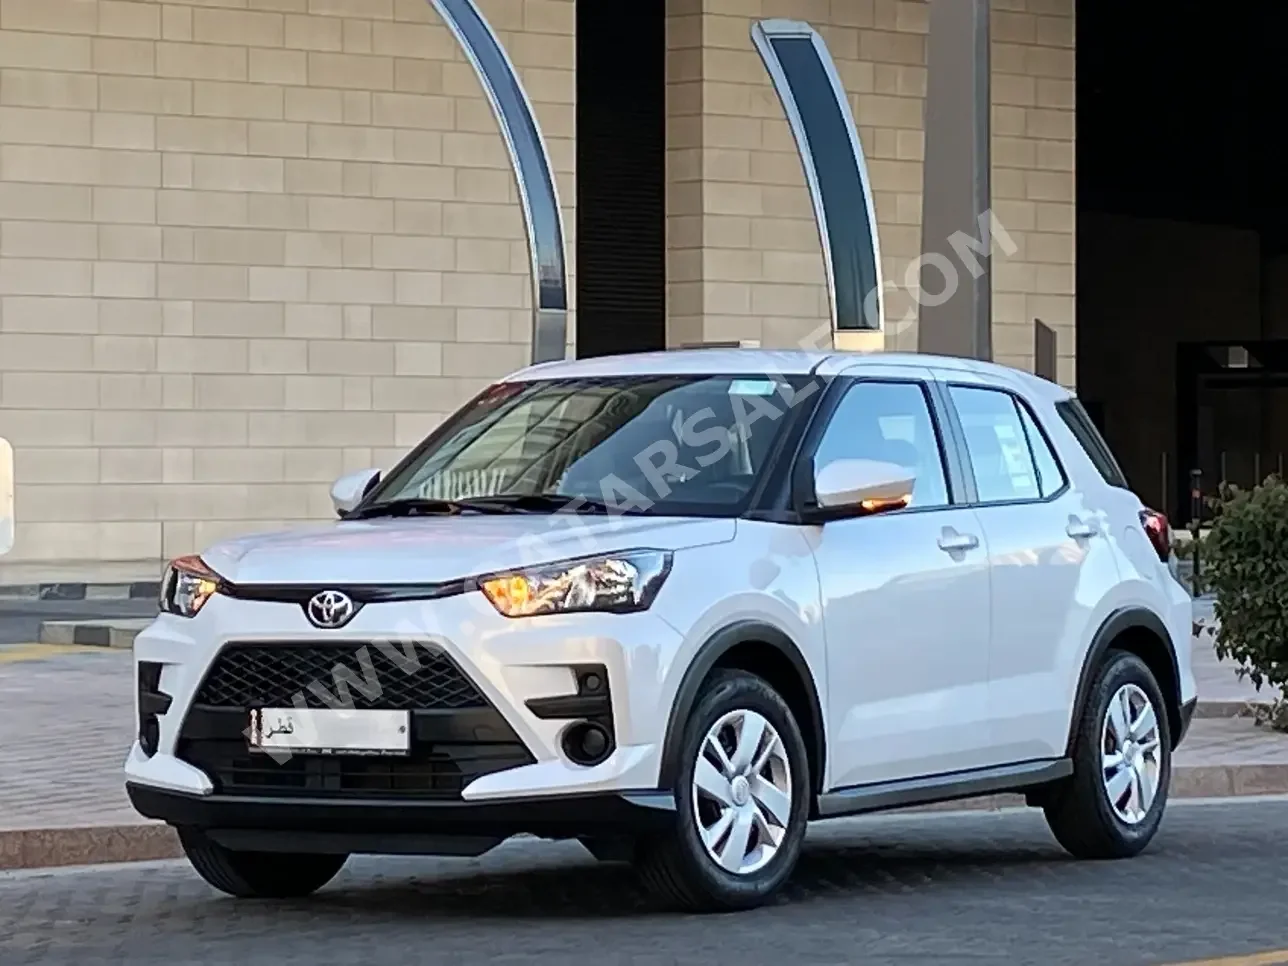 Toyota  Raize  2022  Automatic  26,000 Km  3 Cylinder  All Wheel Drive (AWD)  SUV  White  With Warranty